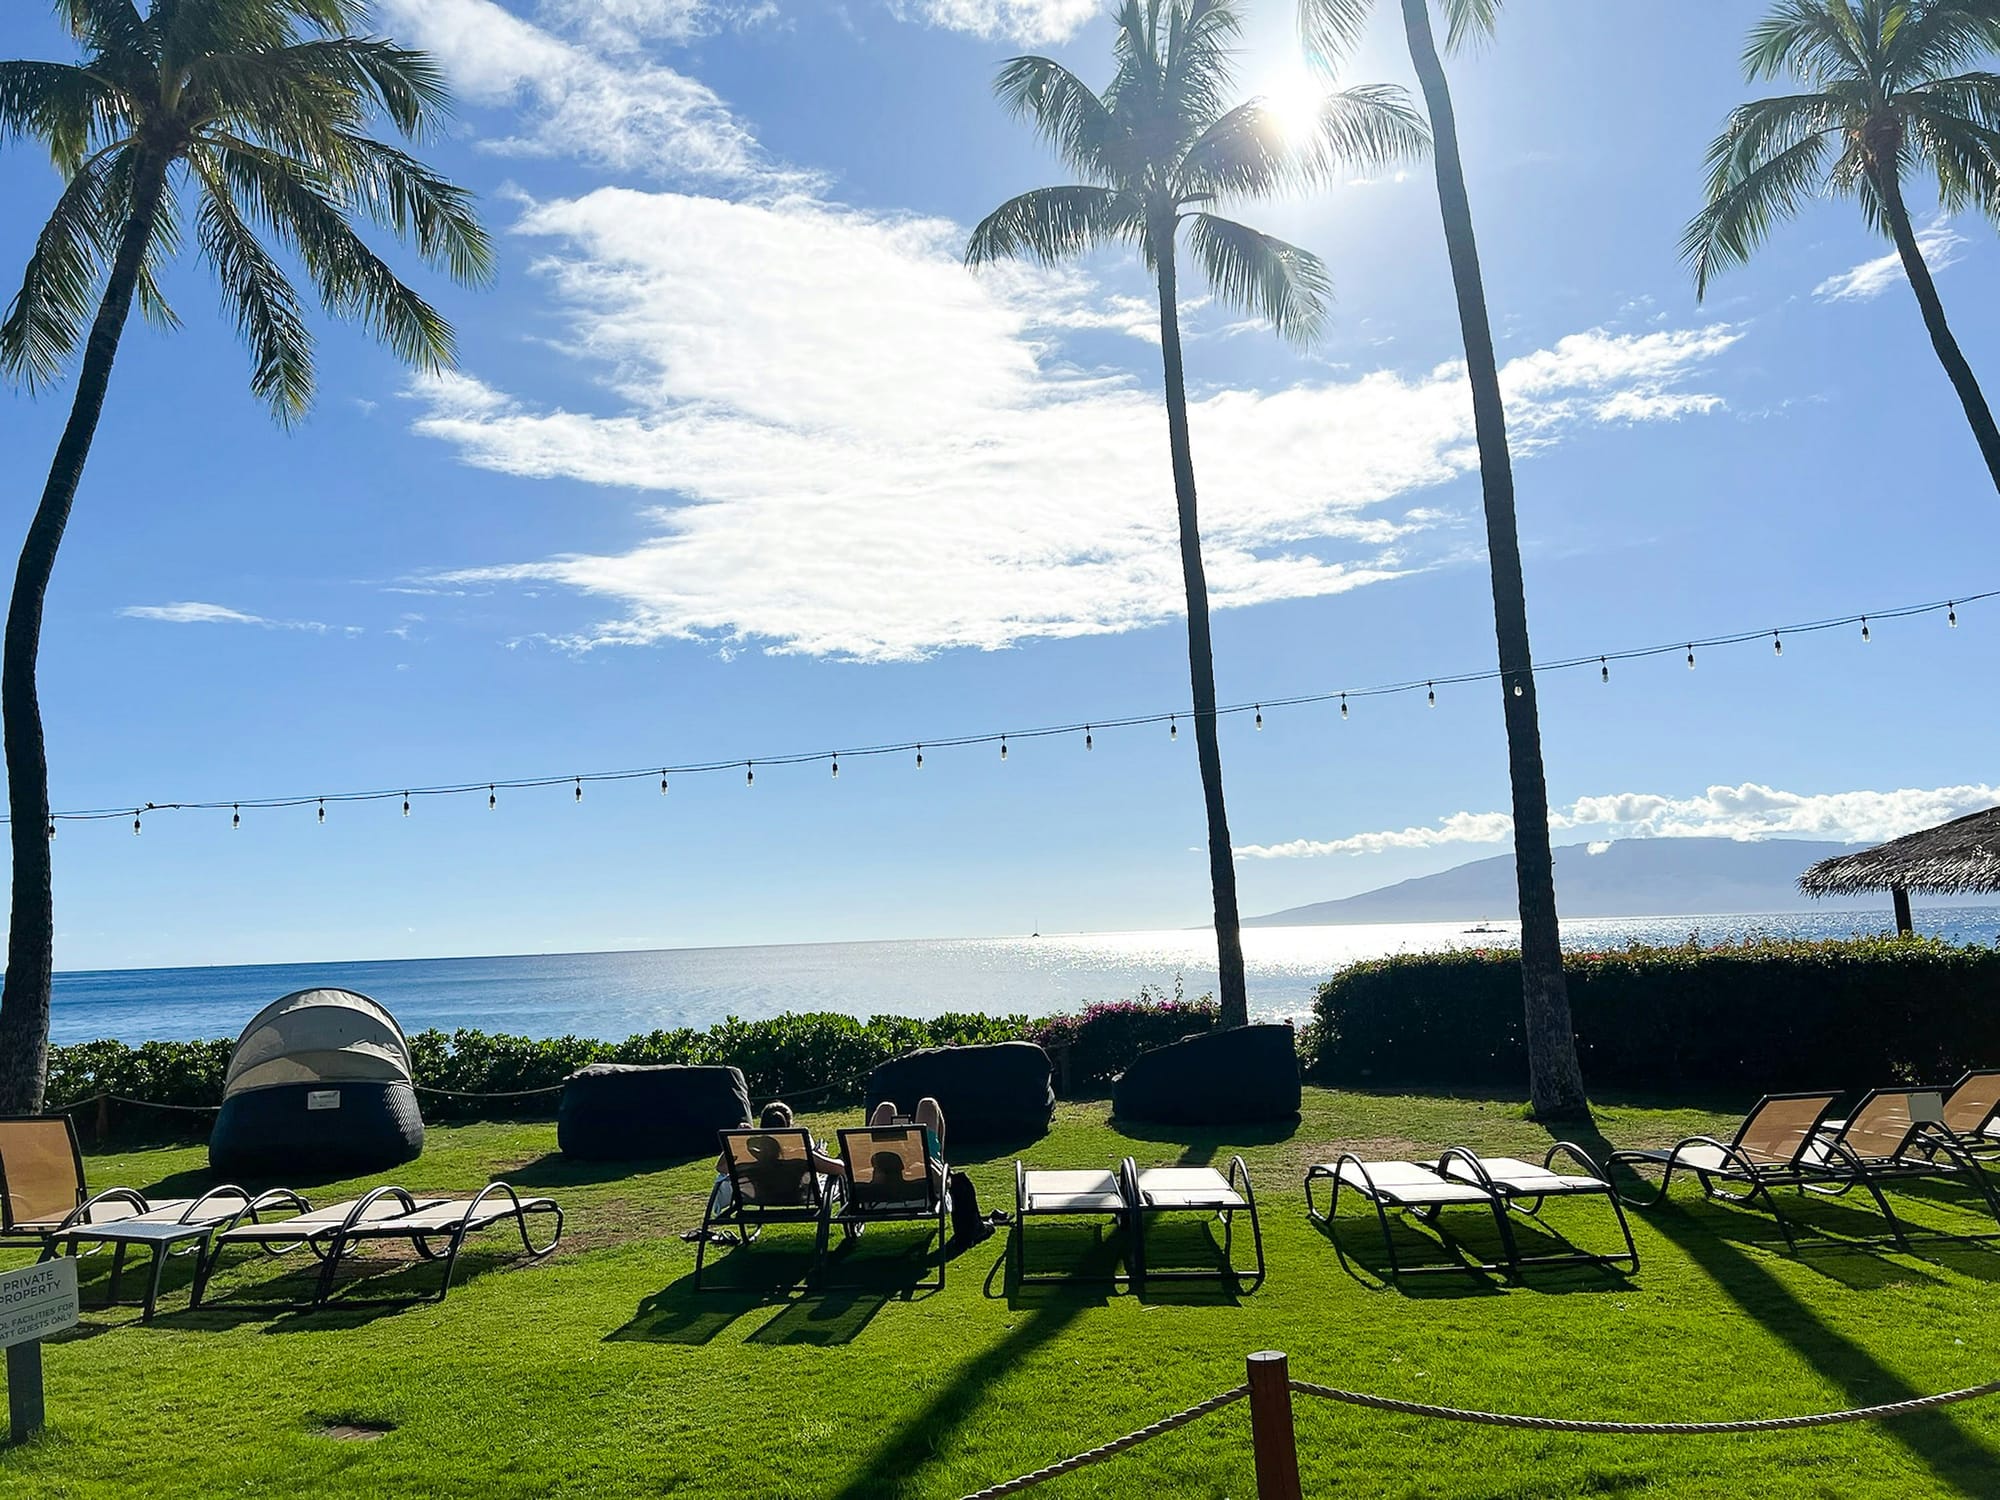 Hyatt Regency Maui Resort and Spa is a wheelchair accessible resort in Maui